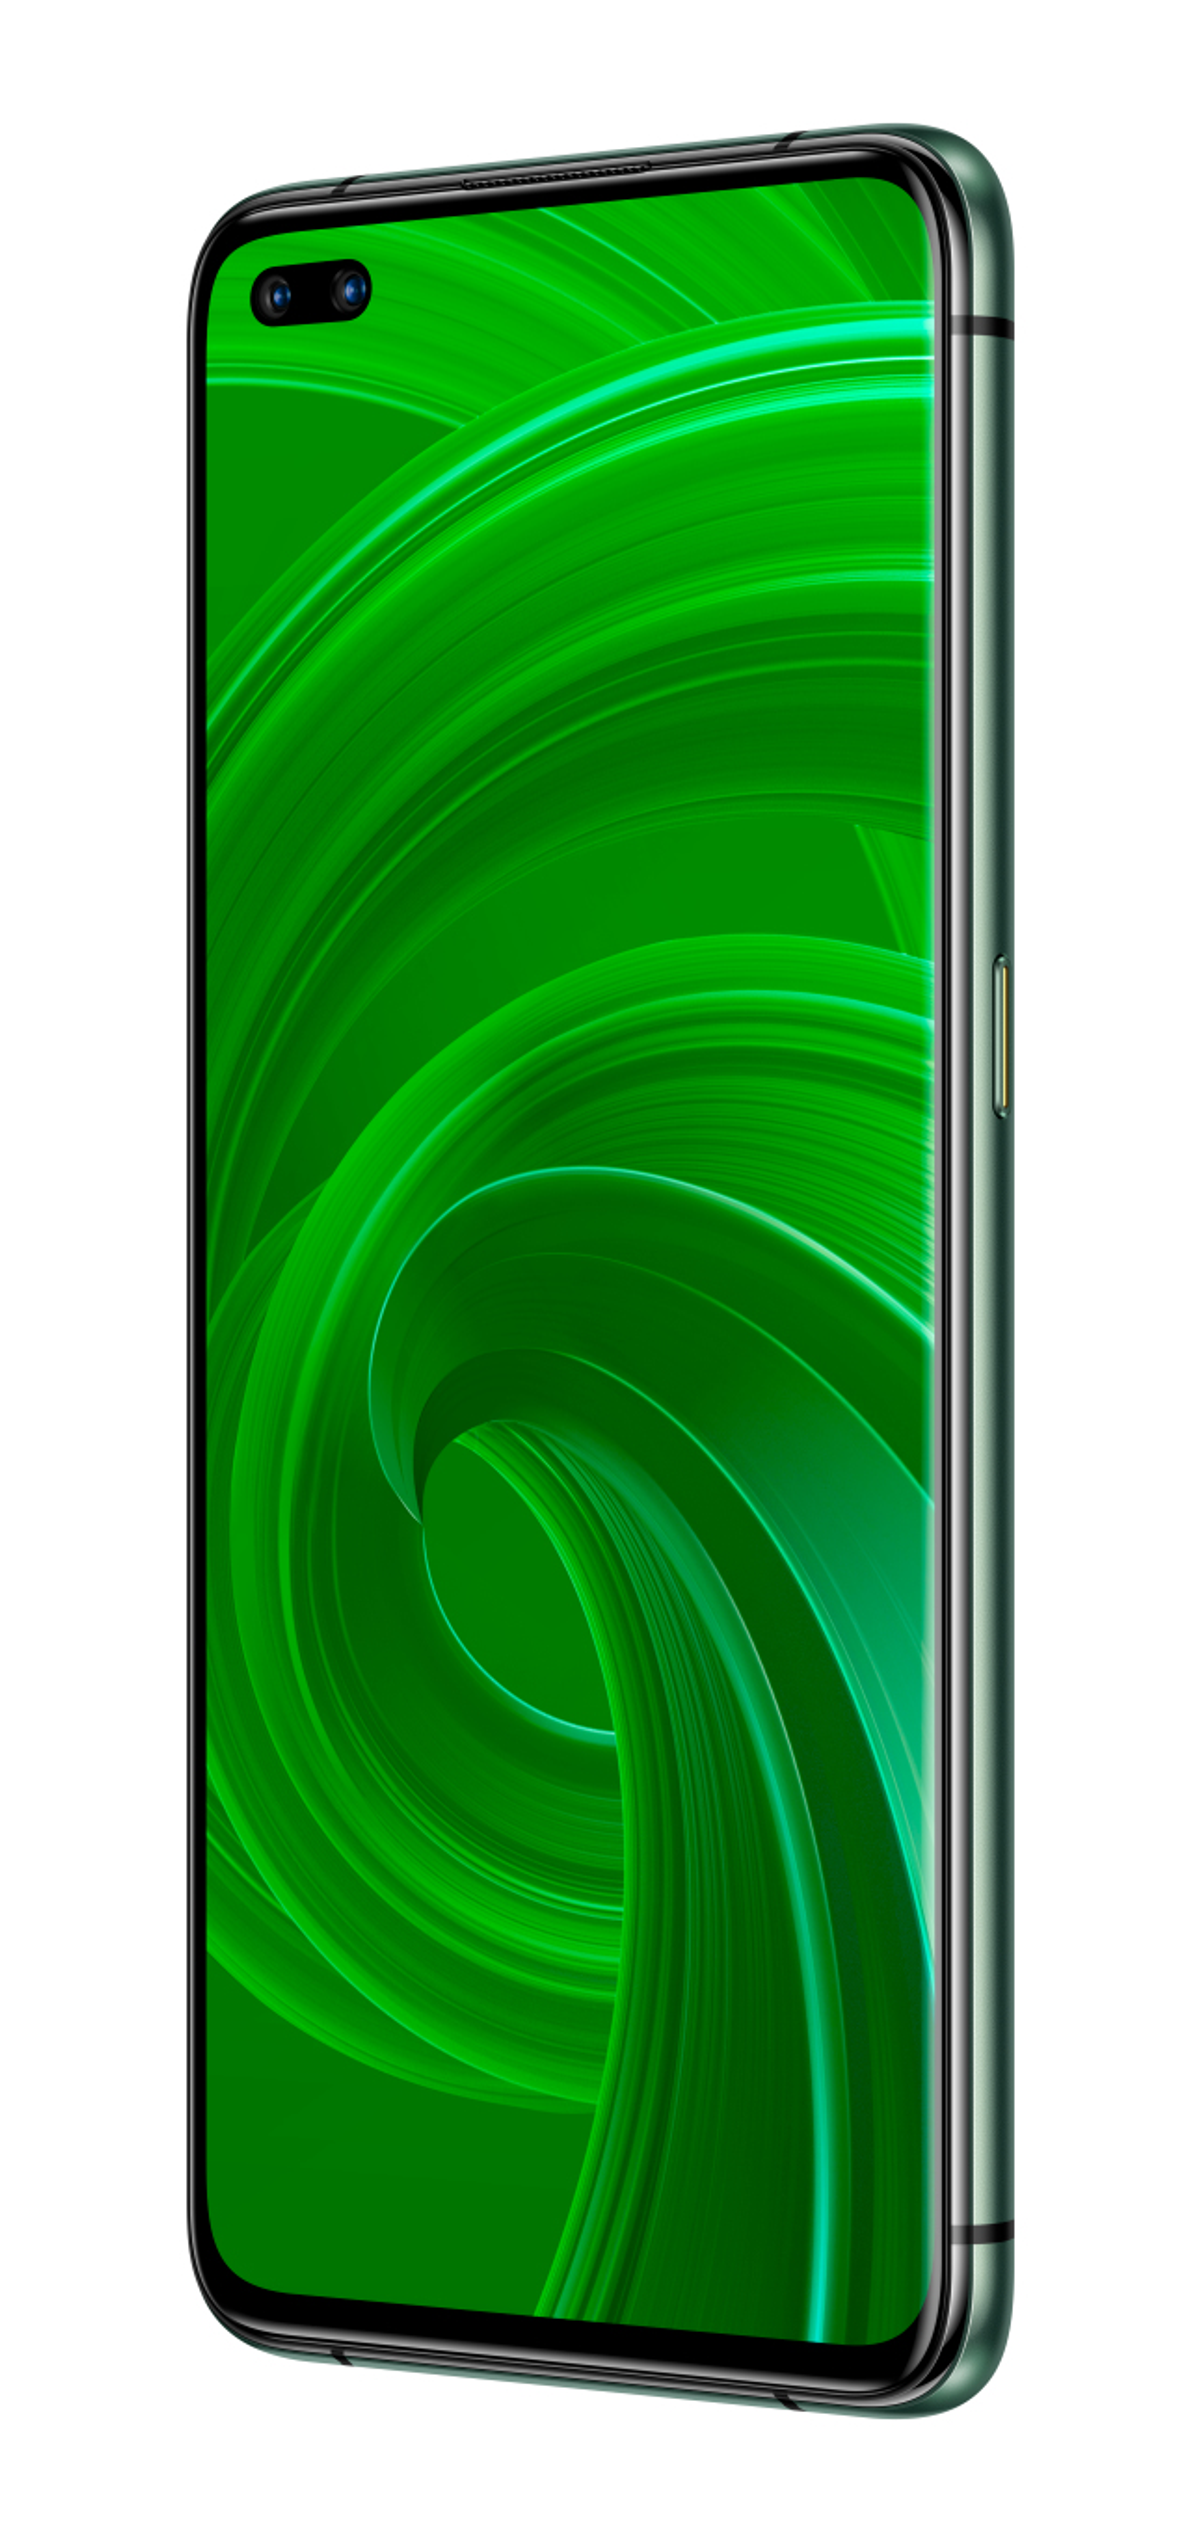 REALME X50 12+256GB GB GREEN Green Dual MOSS Moss SIM 256 PRO